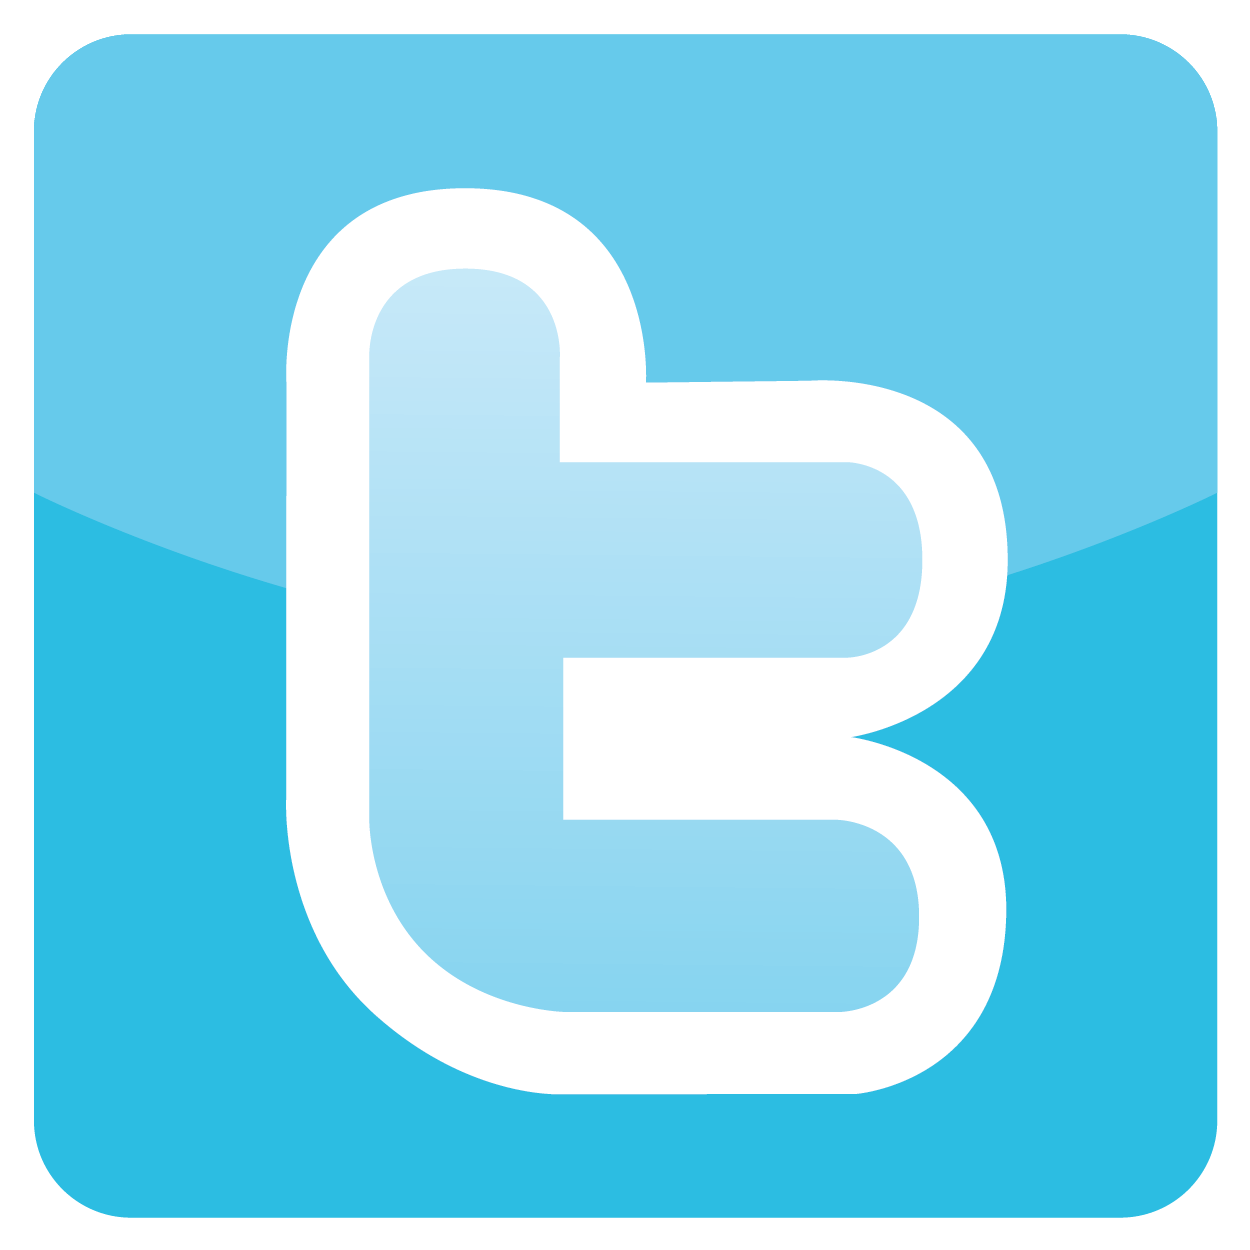 Download Facebook Logo Media Twitter Design Social Iconfinder Icon Free Freepngimg